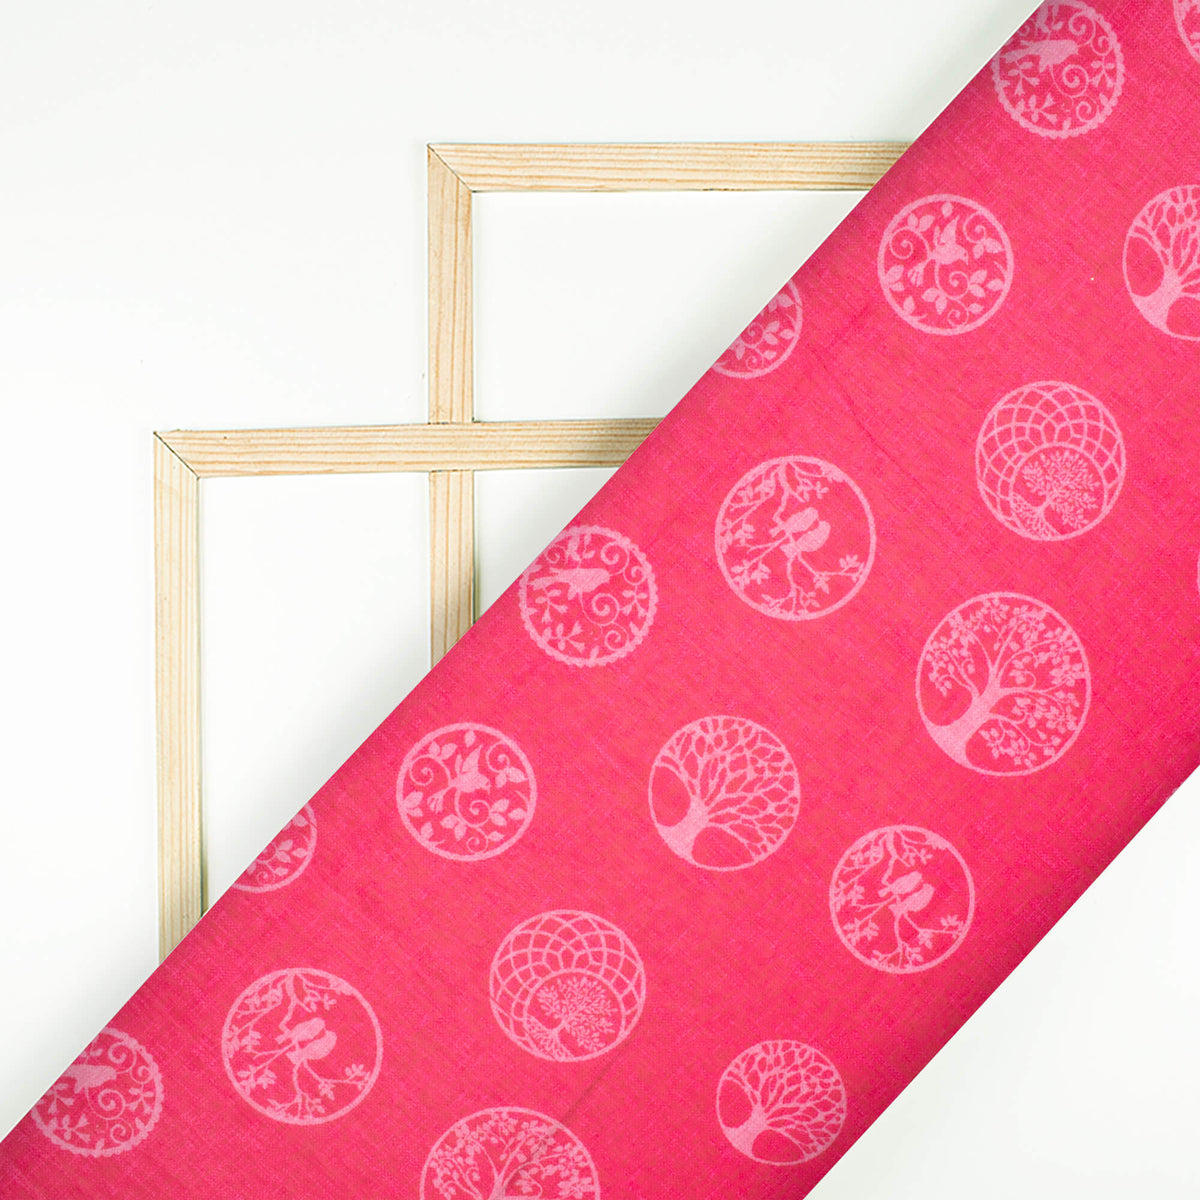 Fandango Pink Quirky Pattern Digital Print Lush Satin Fabric